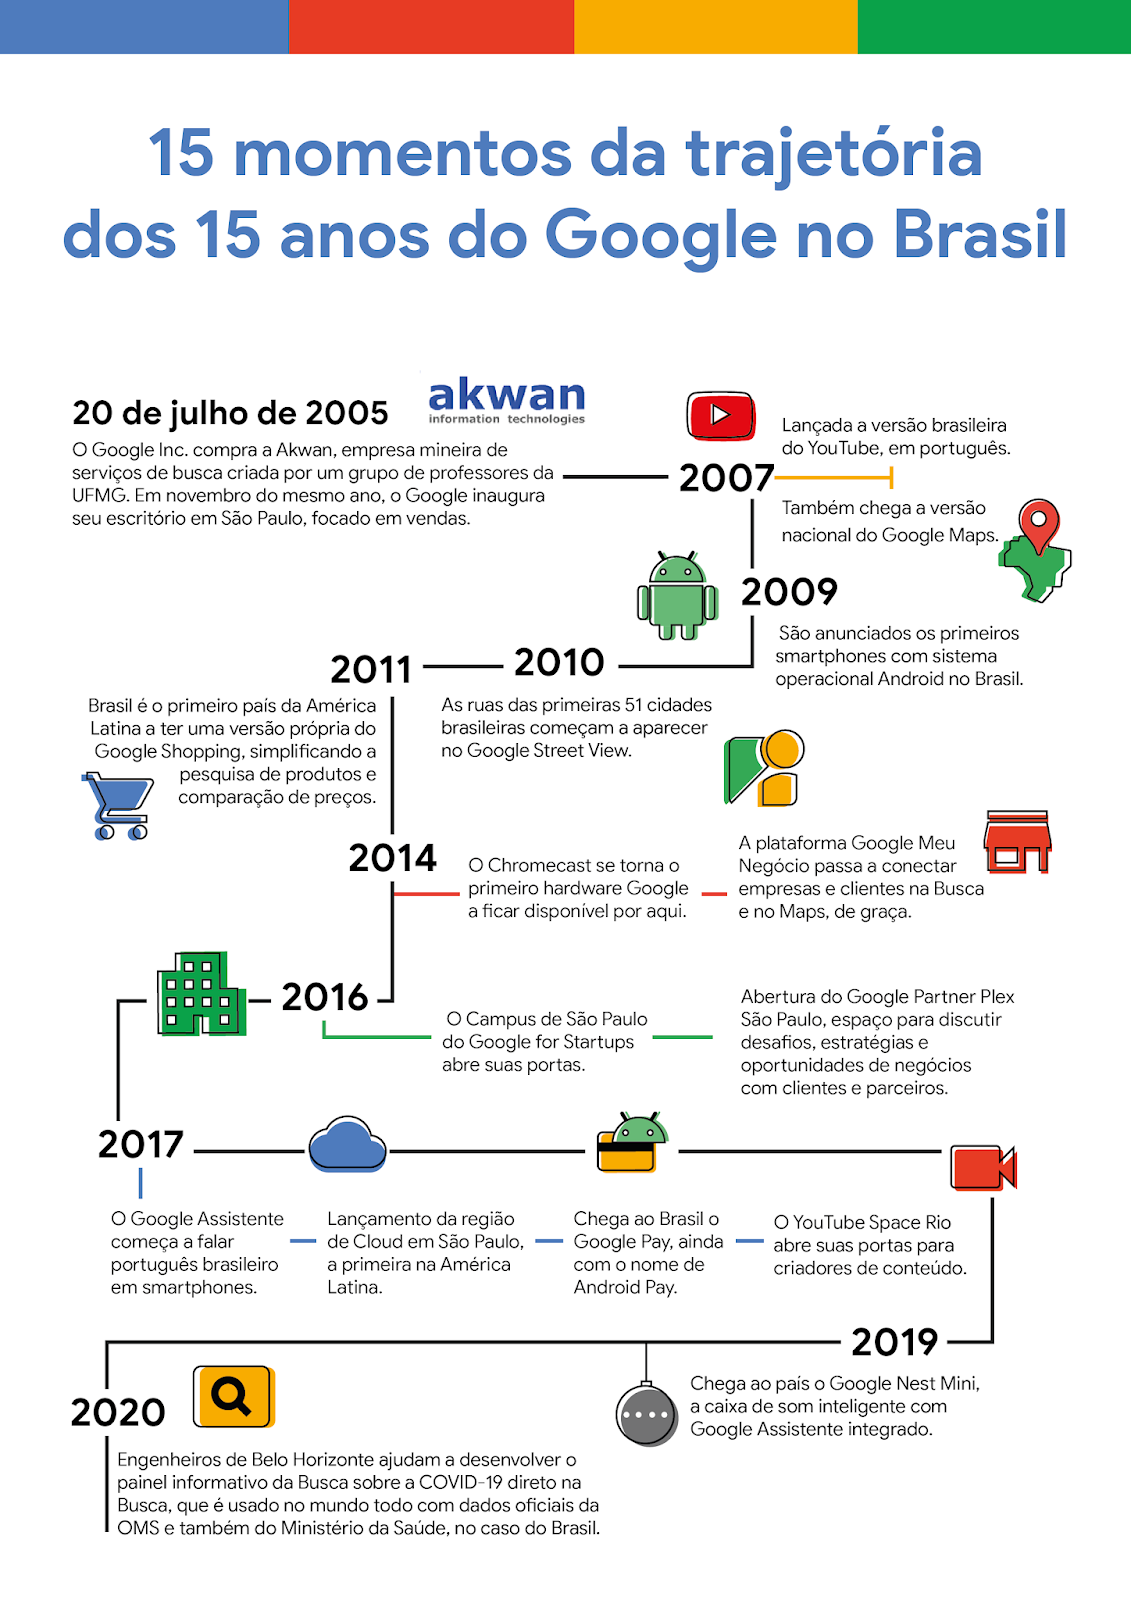 O blog do Google Brasil: abril 2016